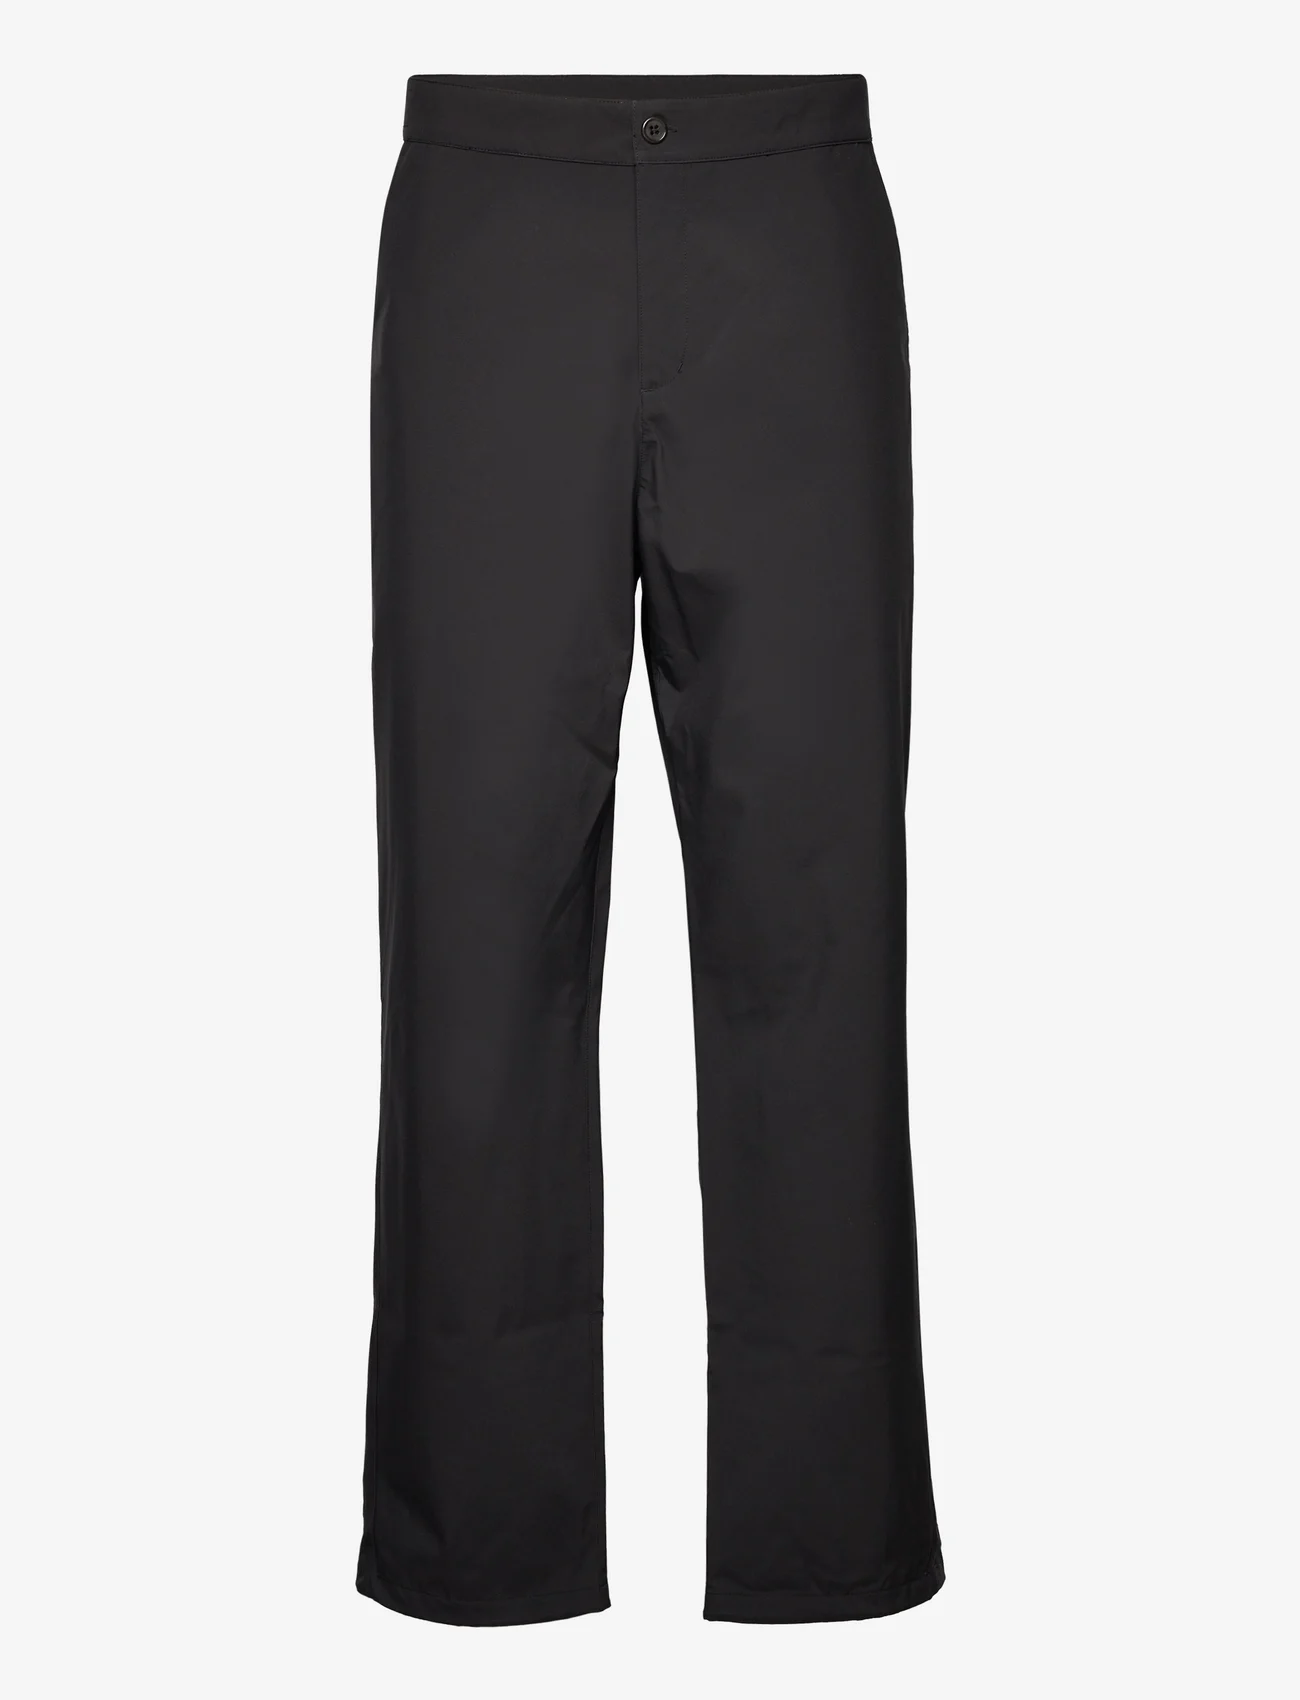 Makia - Kuura 3L pants - chino stila bikses - black - 0